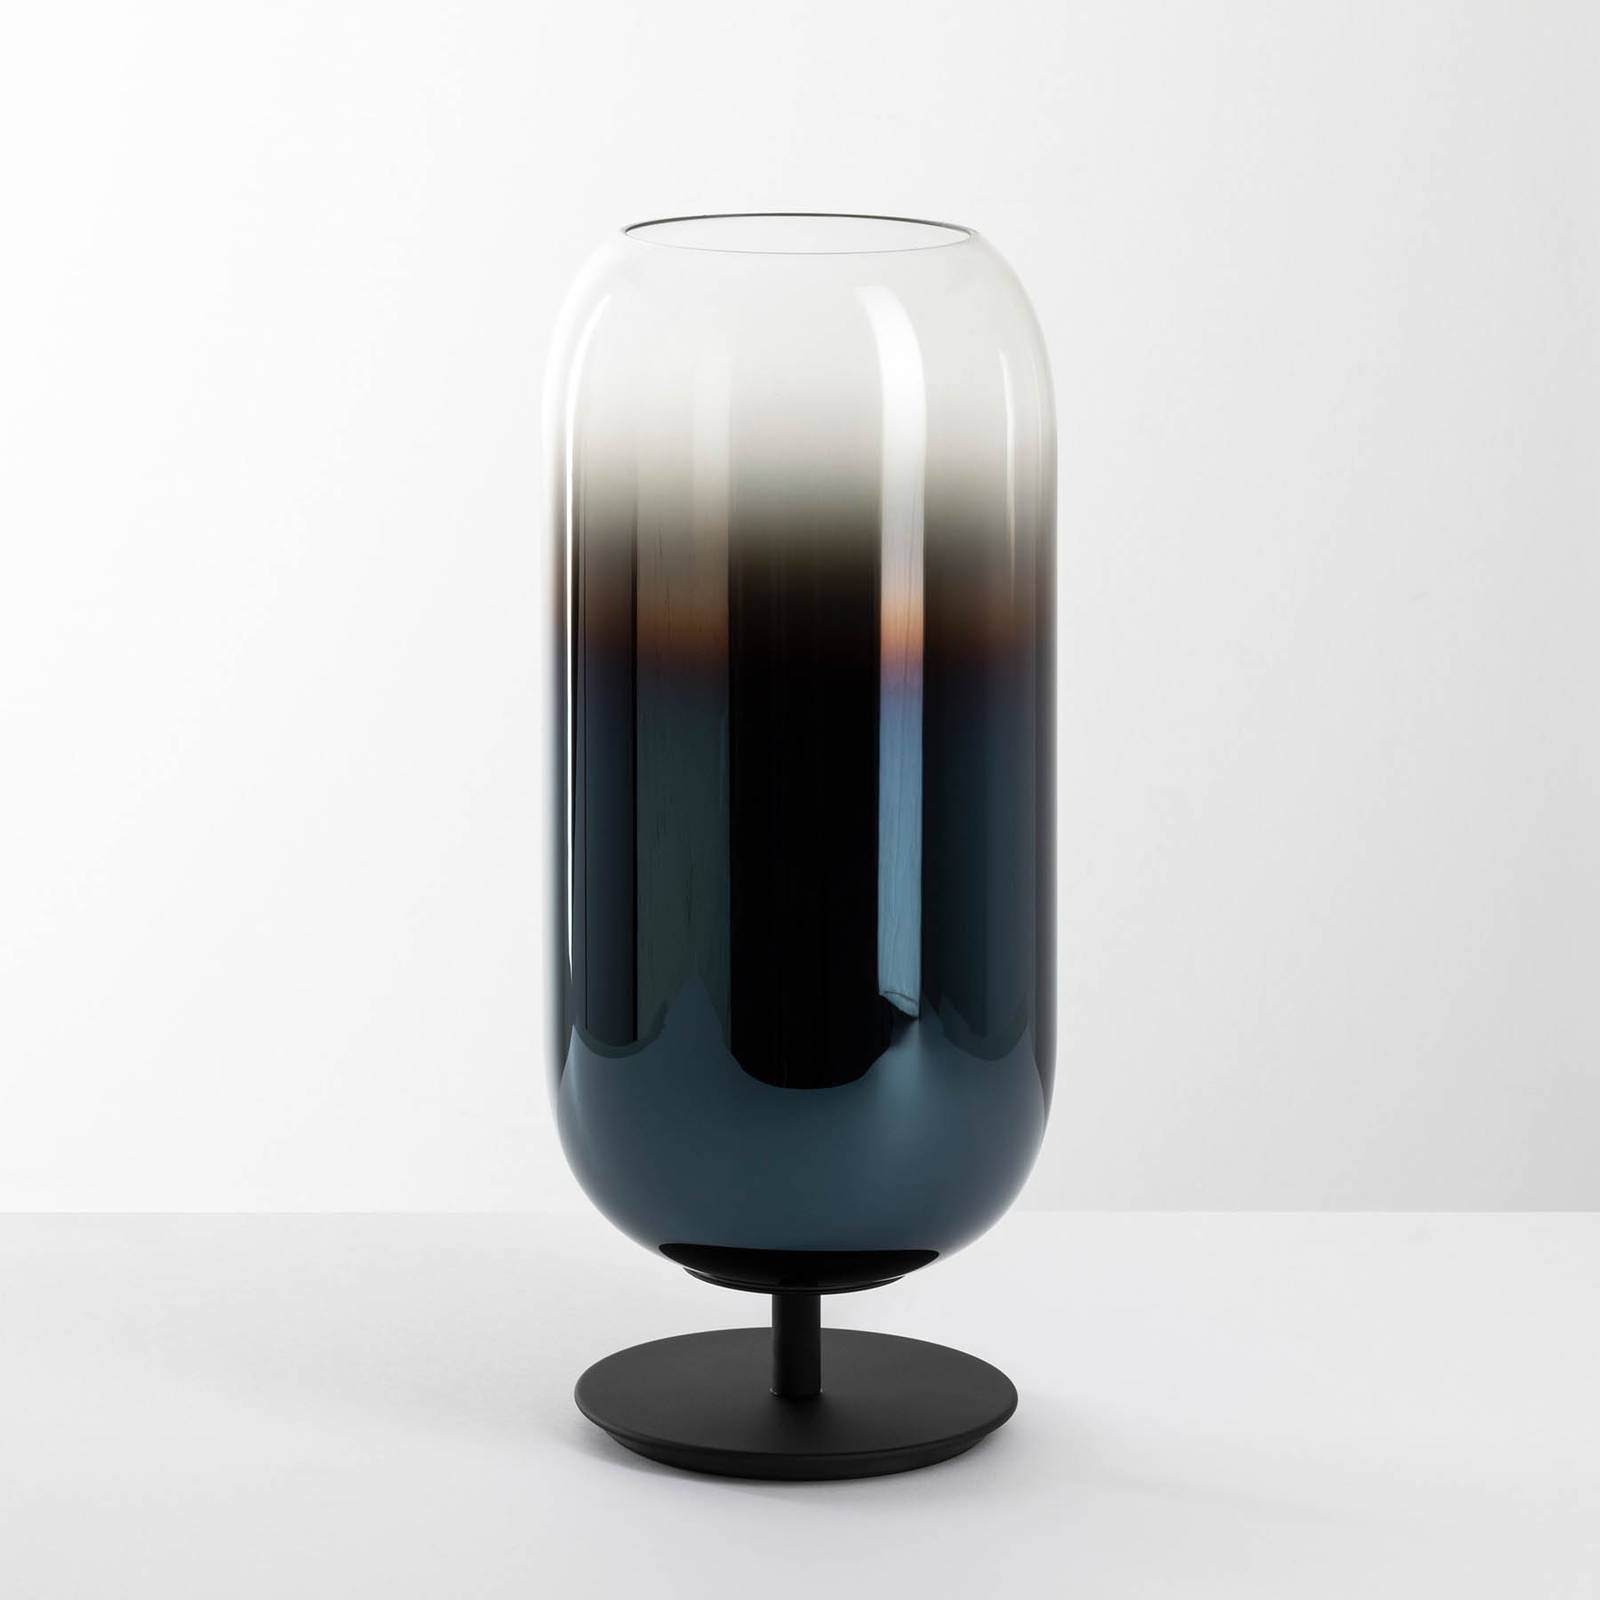 Artemide gpeople mini asztali lámpa, kék/fekete